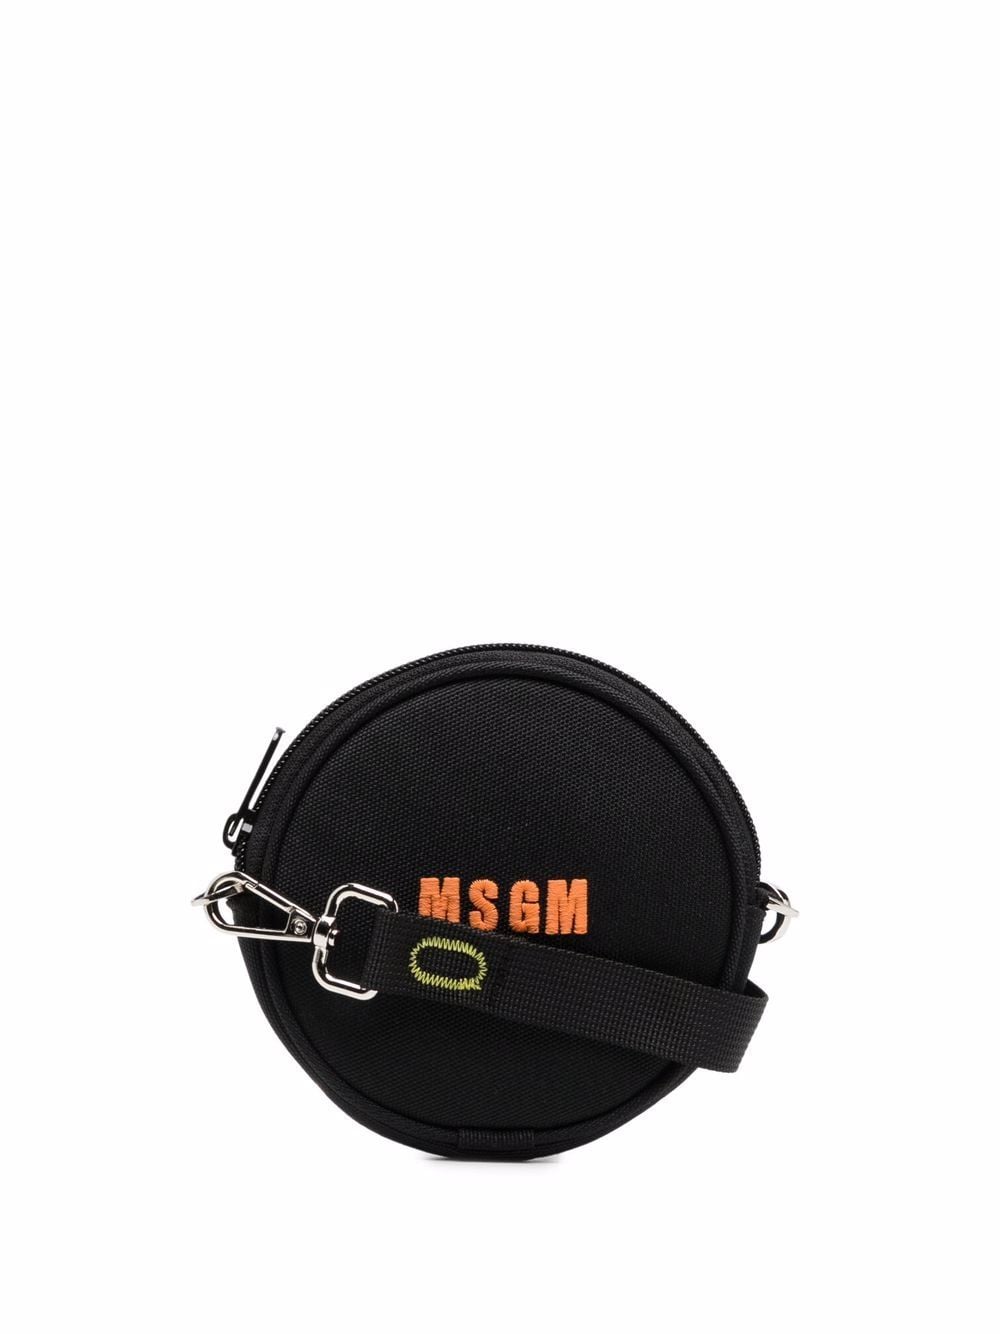 фото Msgm круглая сумка на плечо с логотипом